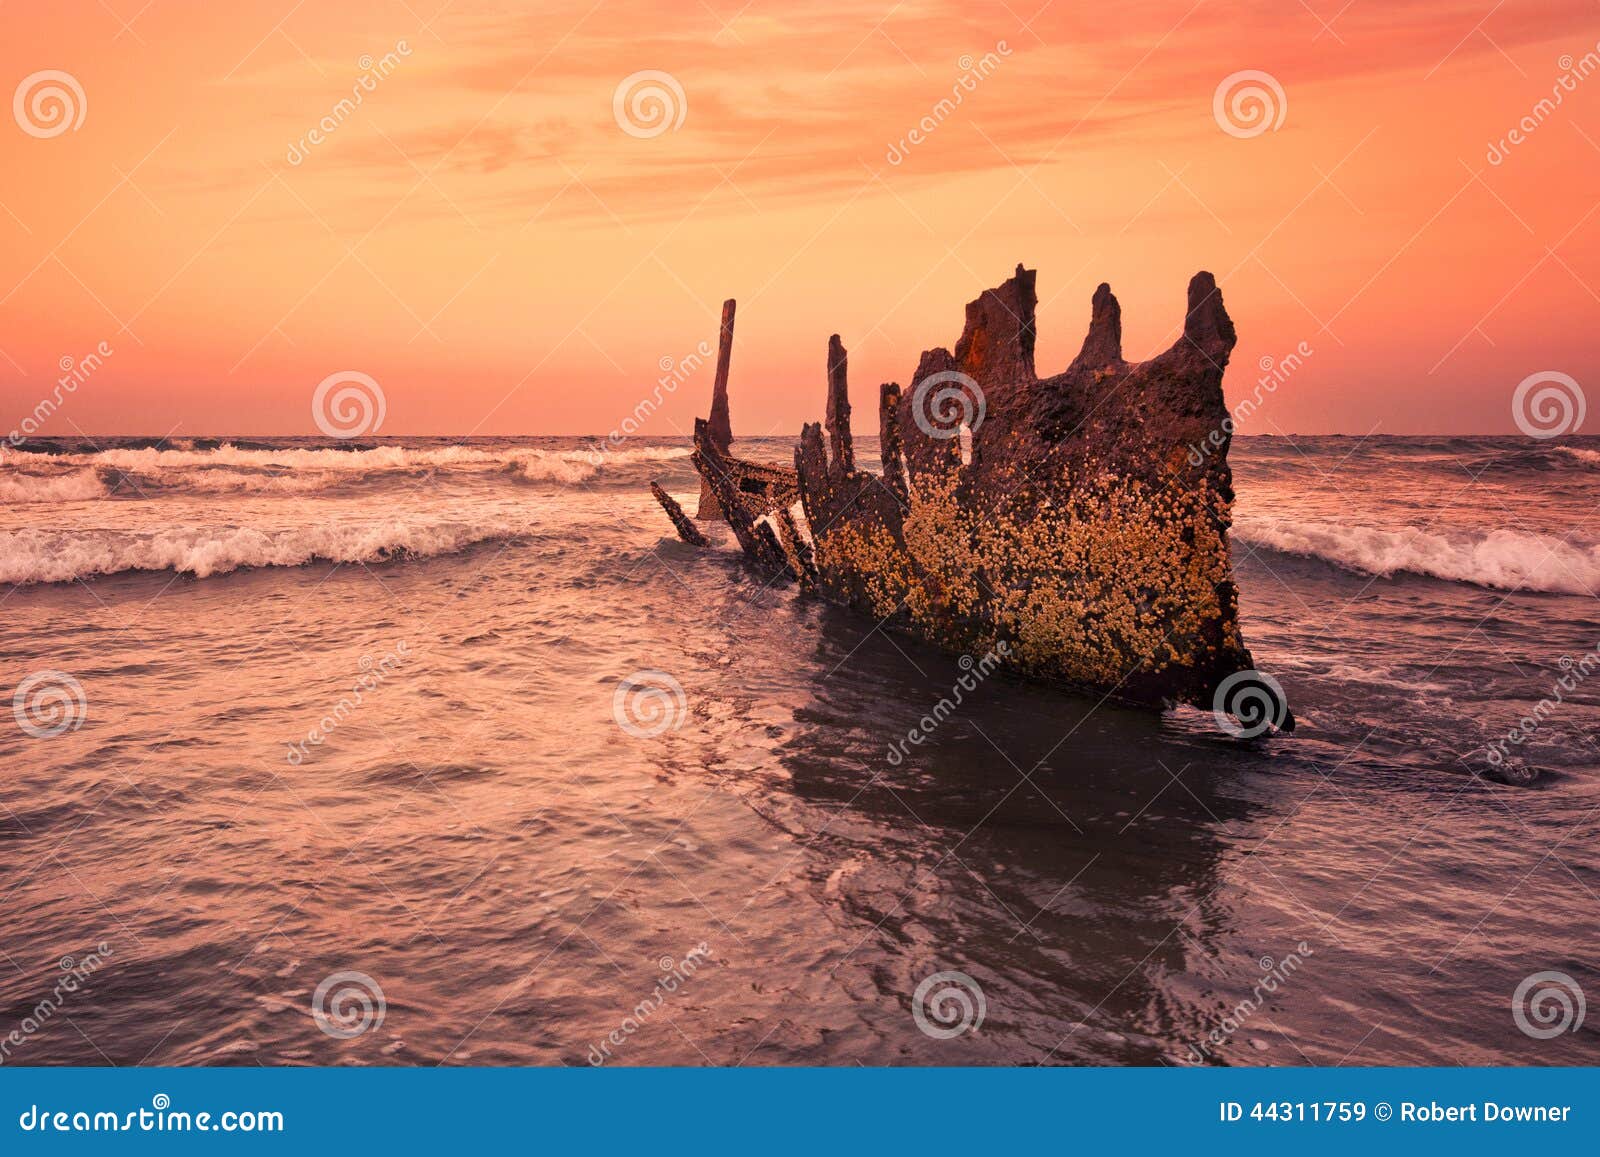 s.s dicky shipwreck